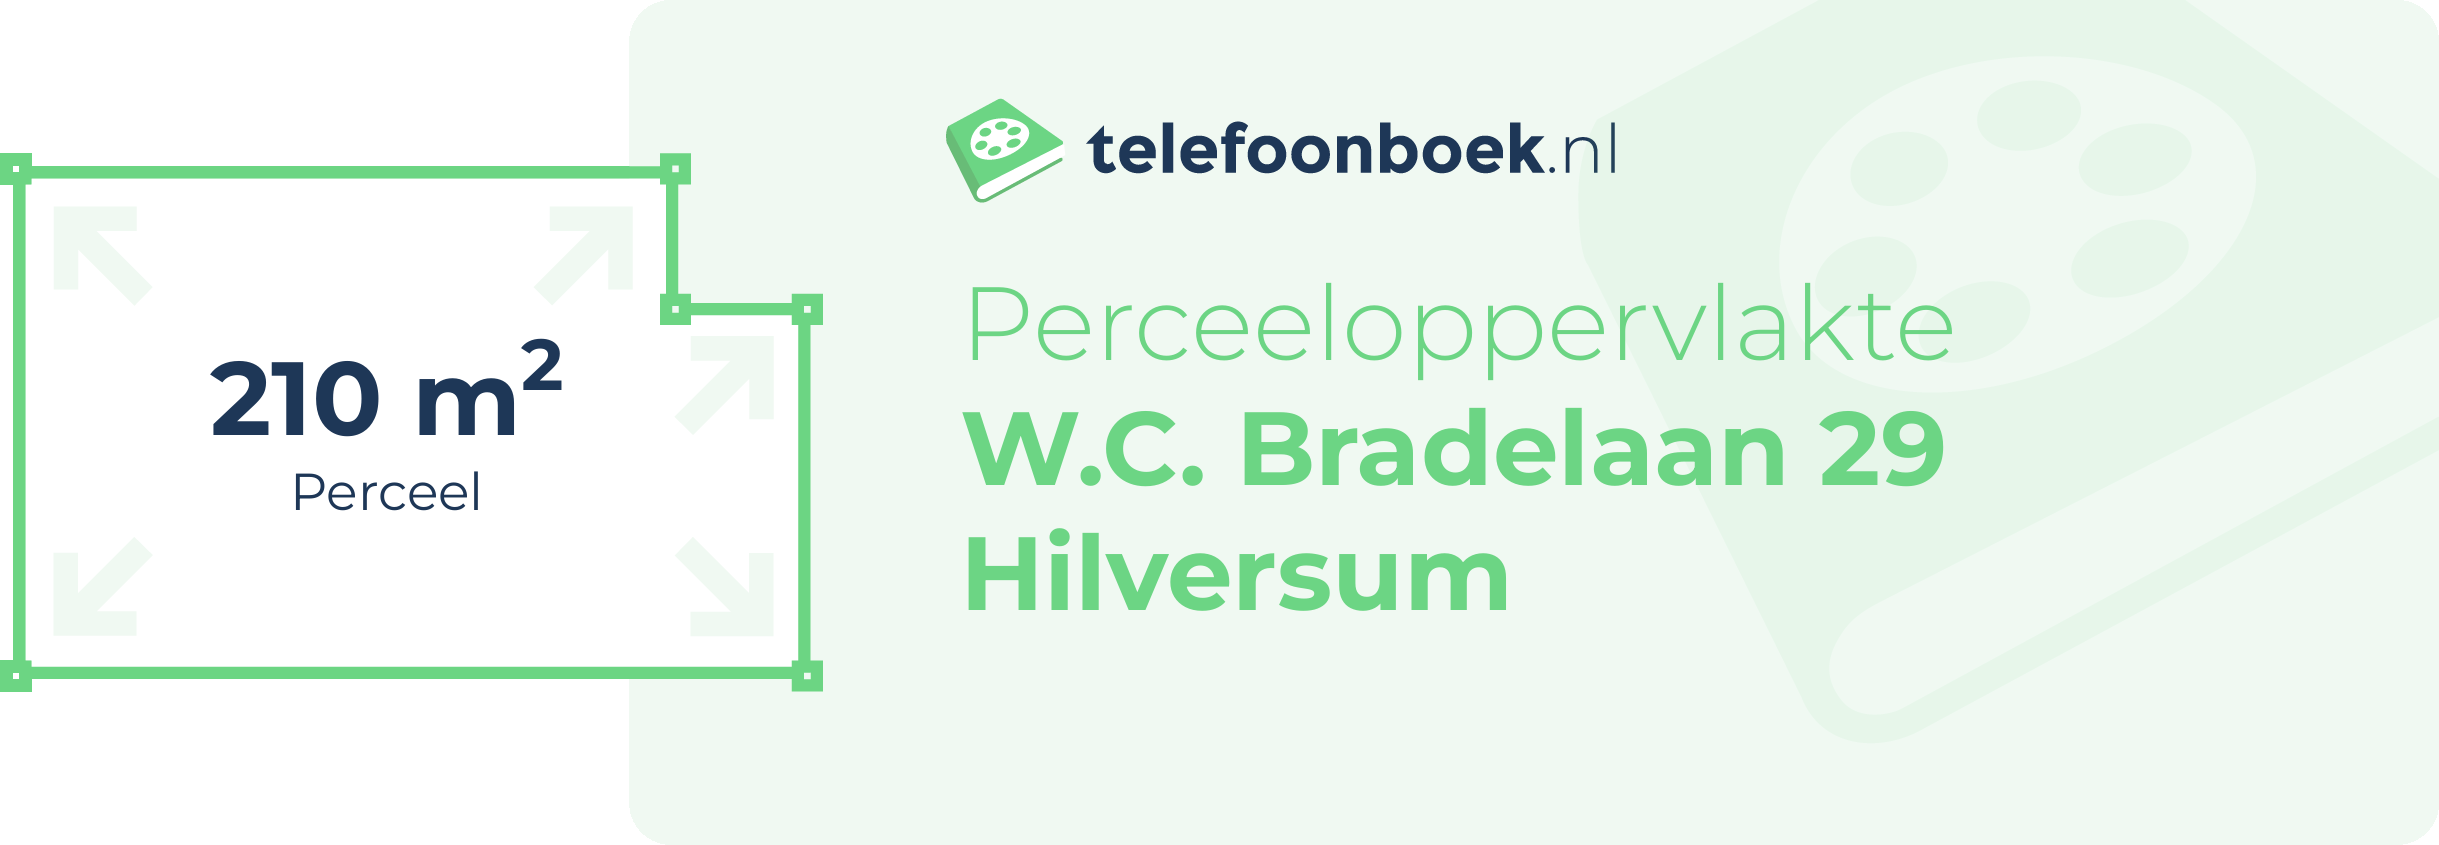 Perceeloppervlakte W.C. Bradelaan 29 Hilversum